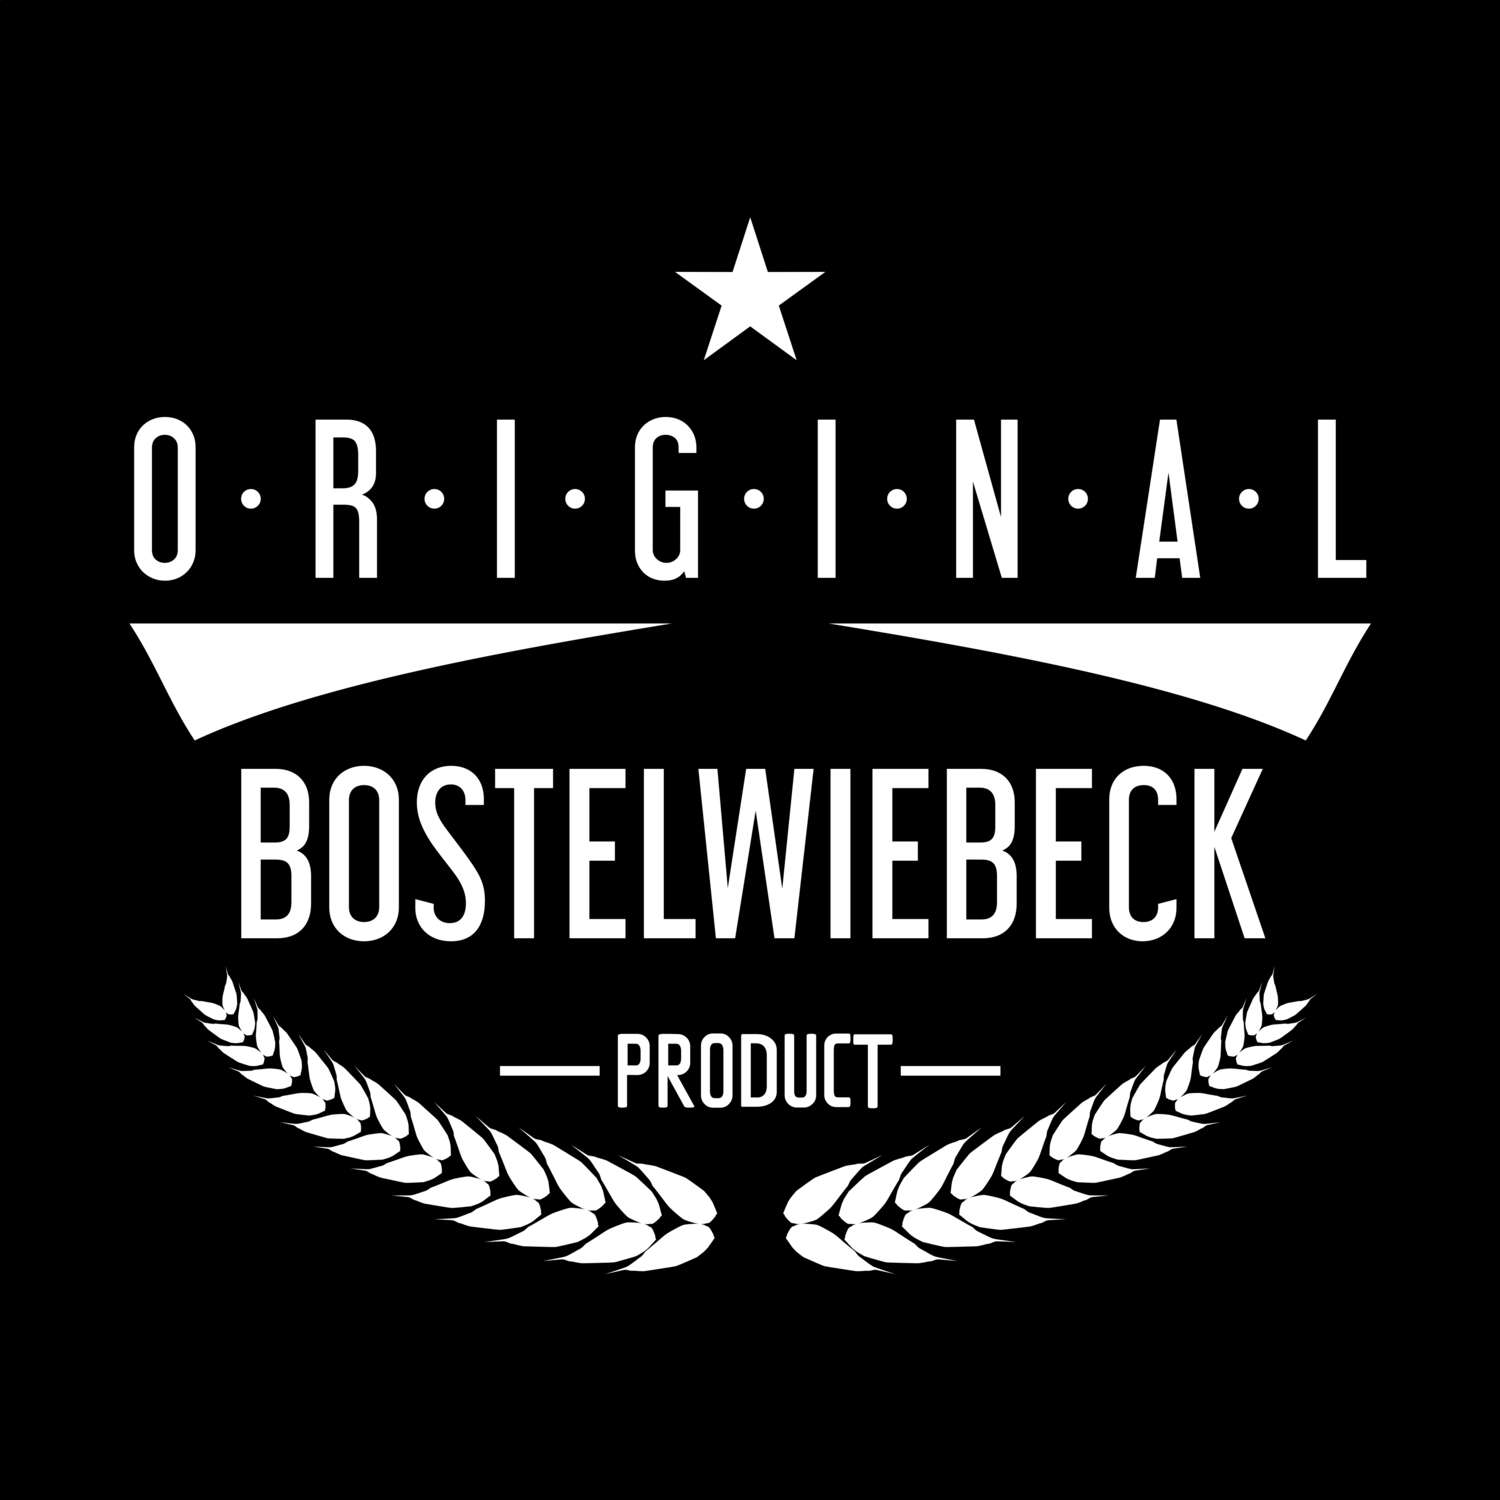 Bostelwiebeck T-Shirt »Original Product«